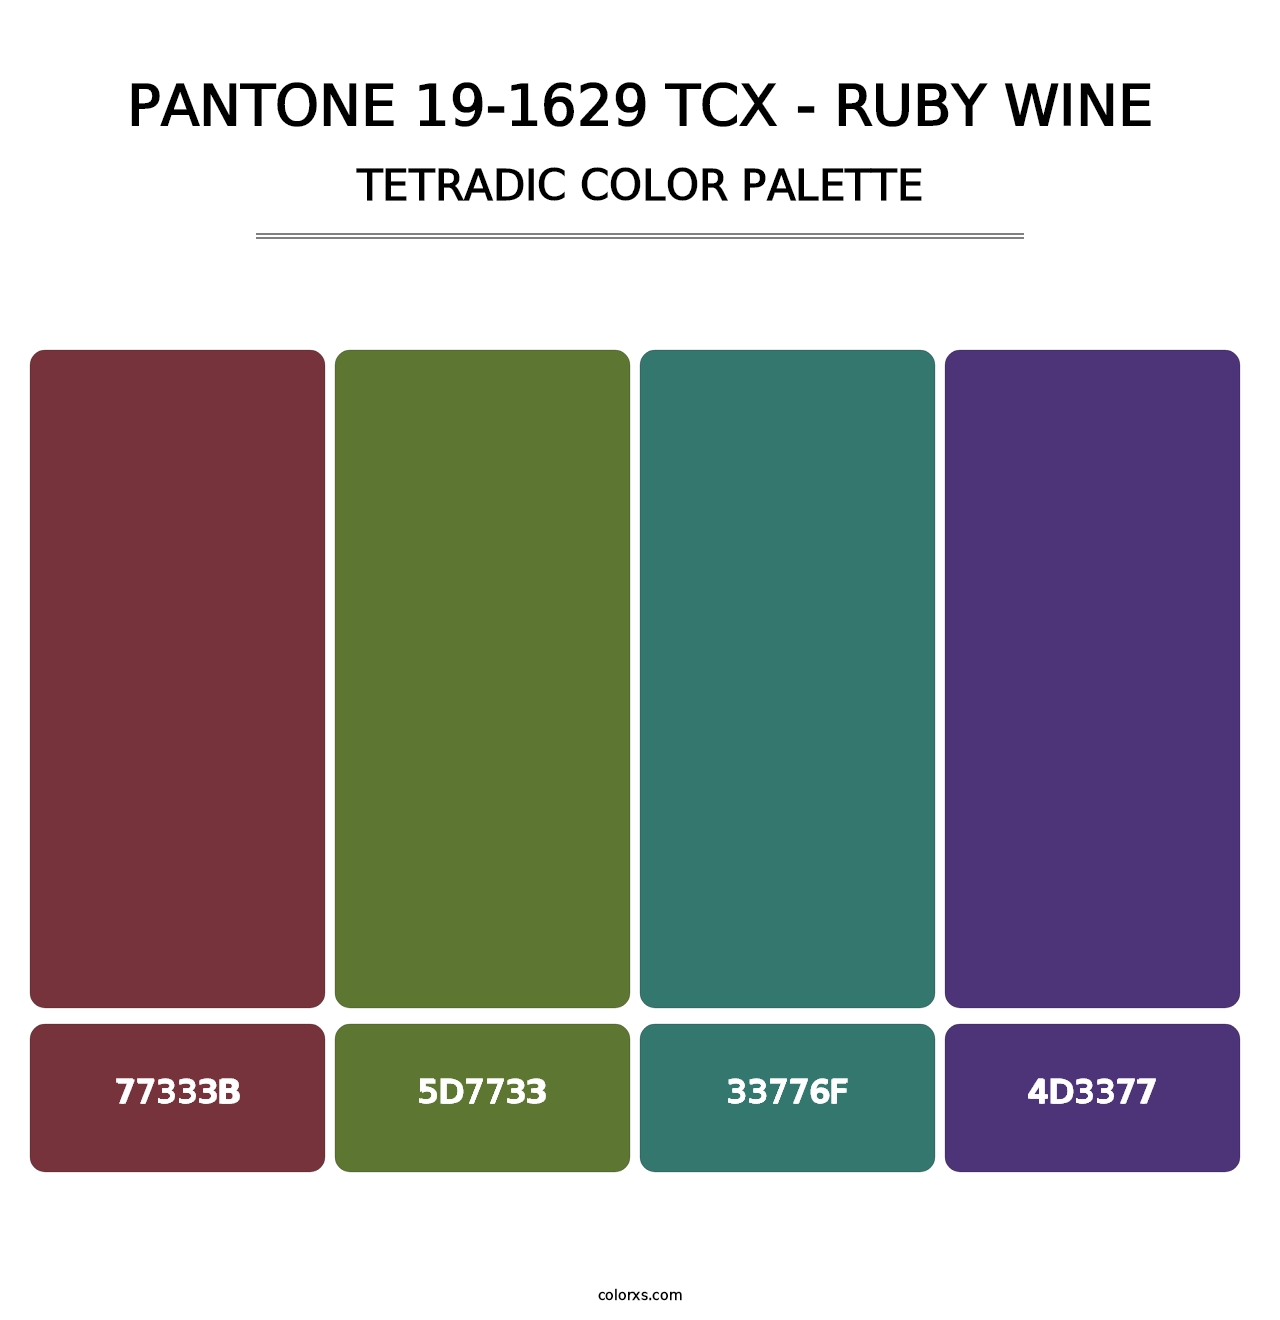 PANTONE 19-1629 TCX - Ruby Wine - Tetradic Color Palette